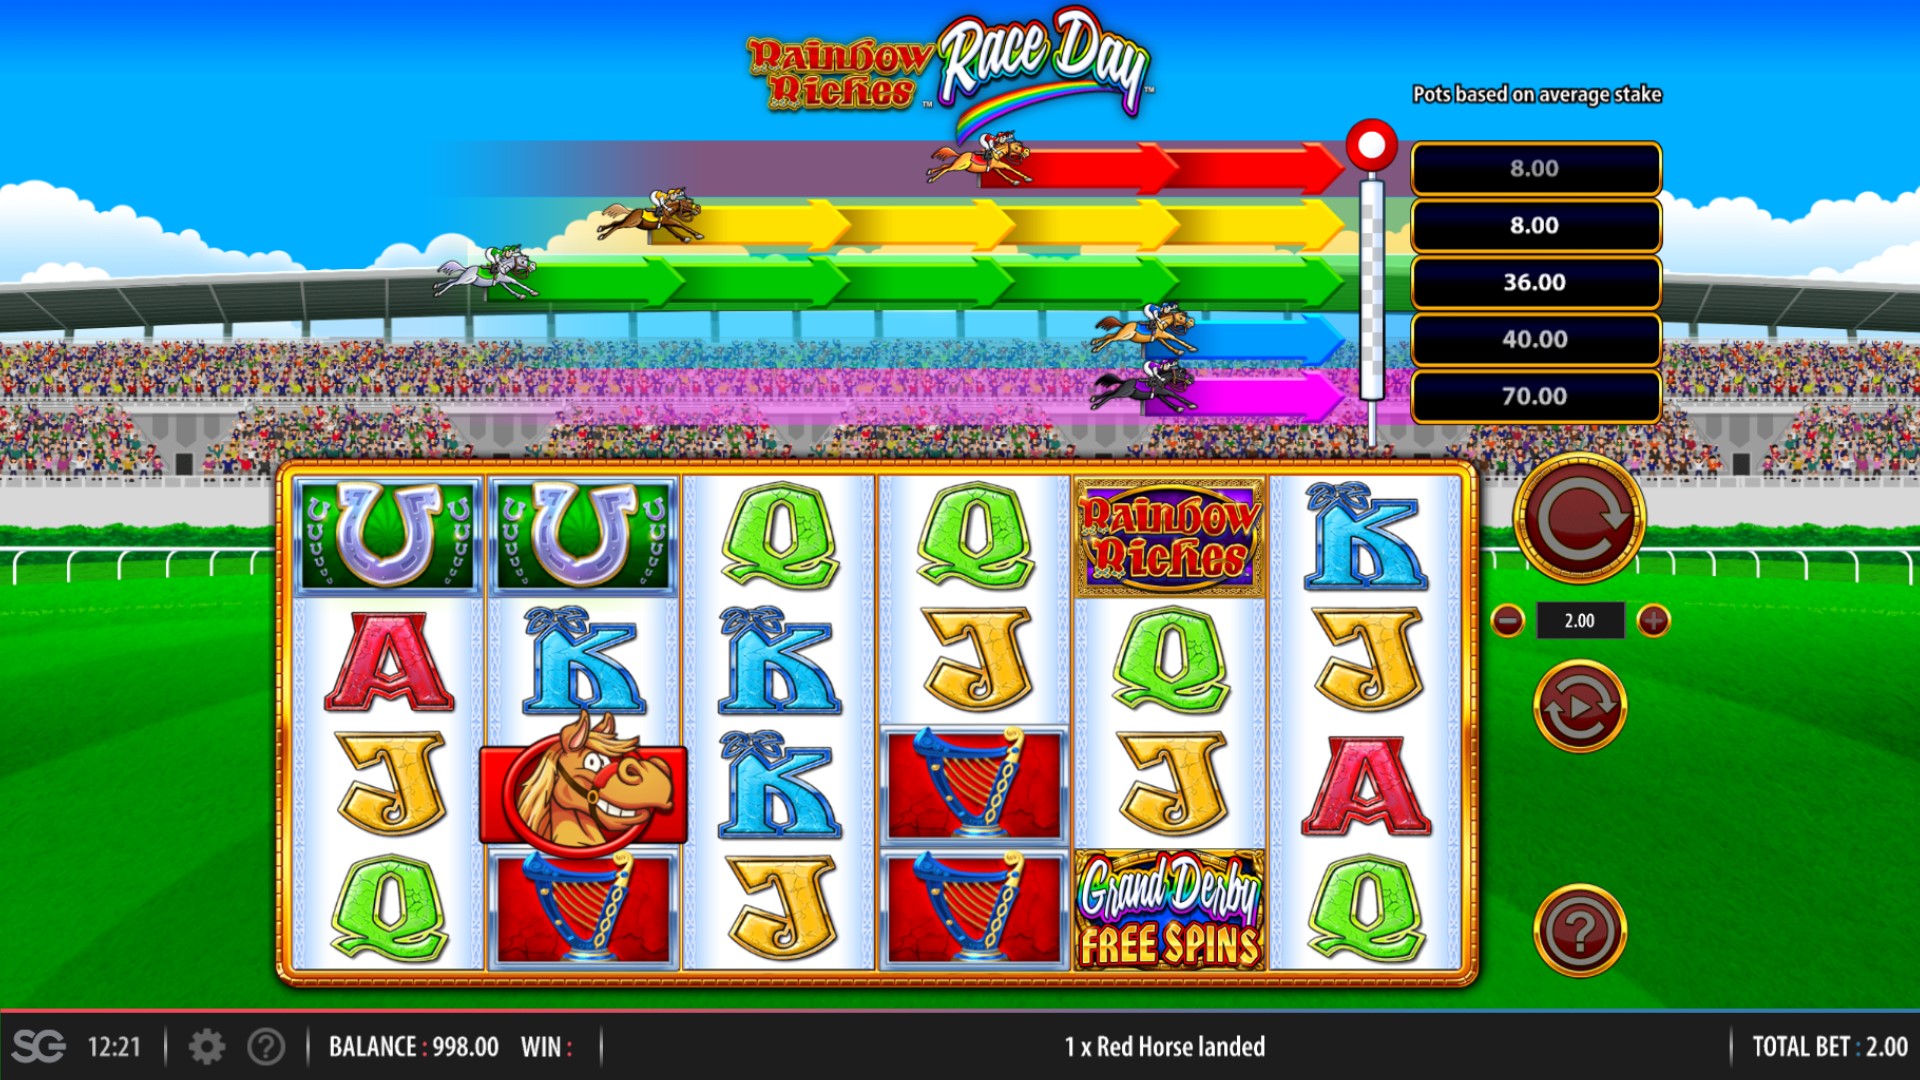 Rainbow Riches Race Day 2 SG Digital